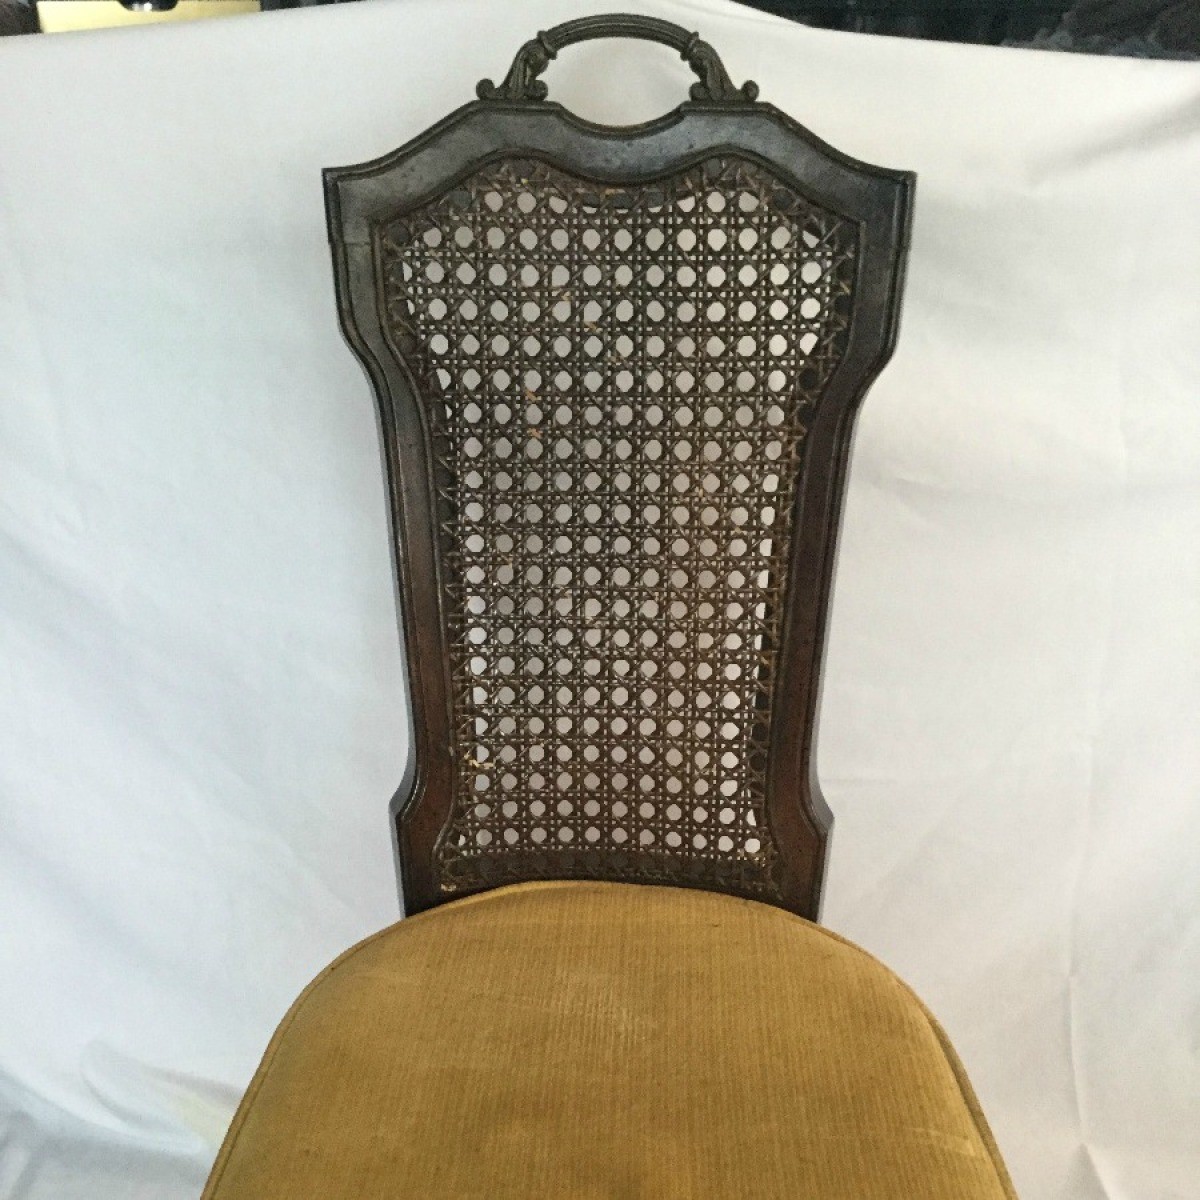 Identifying a Cane Chair? | ThriftyFun